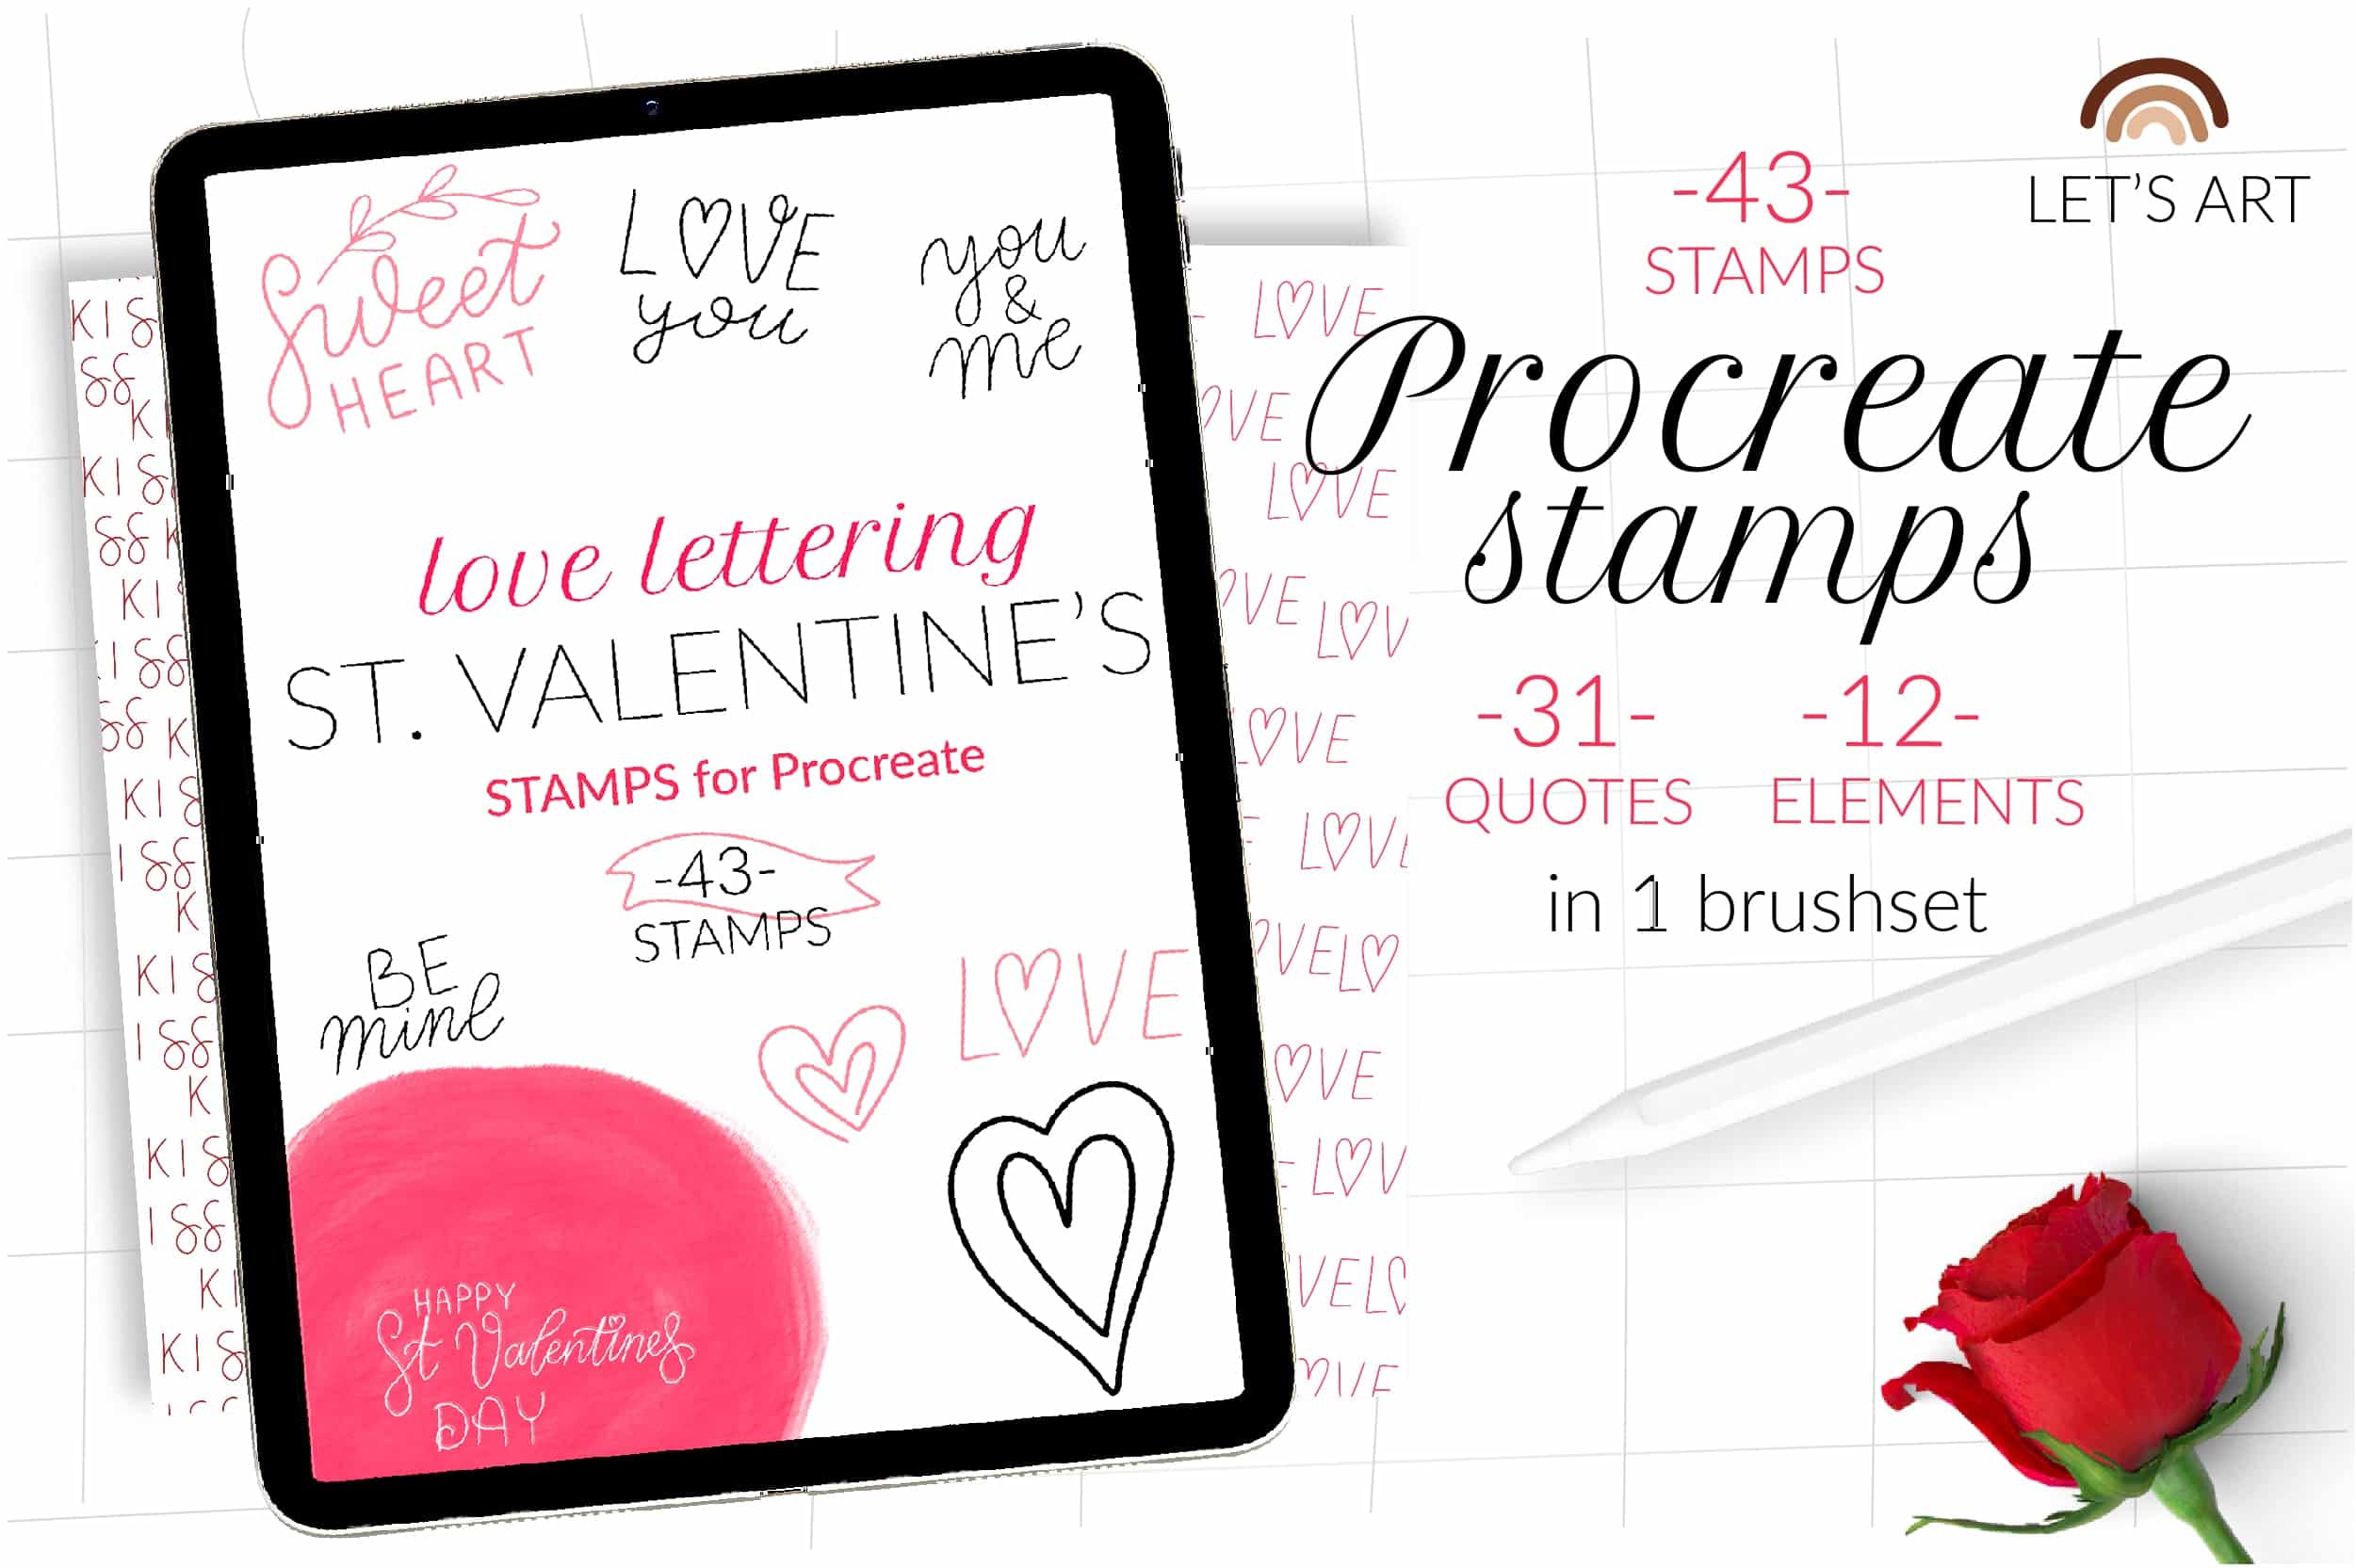 St. Valentine’s Day stamps